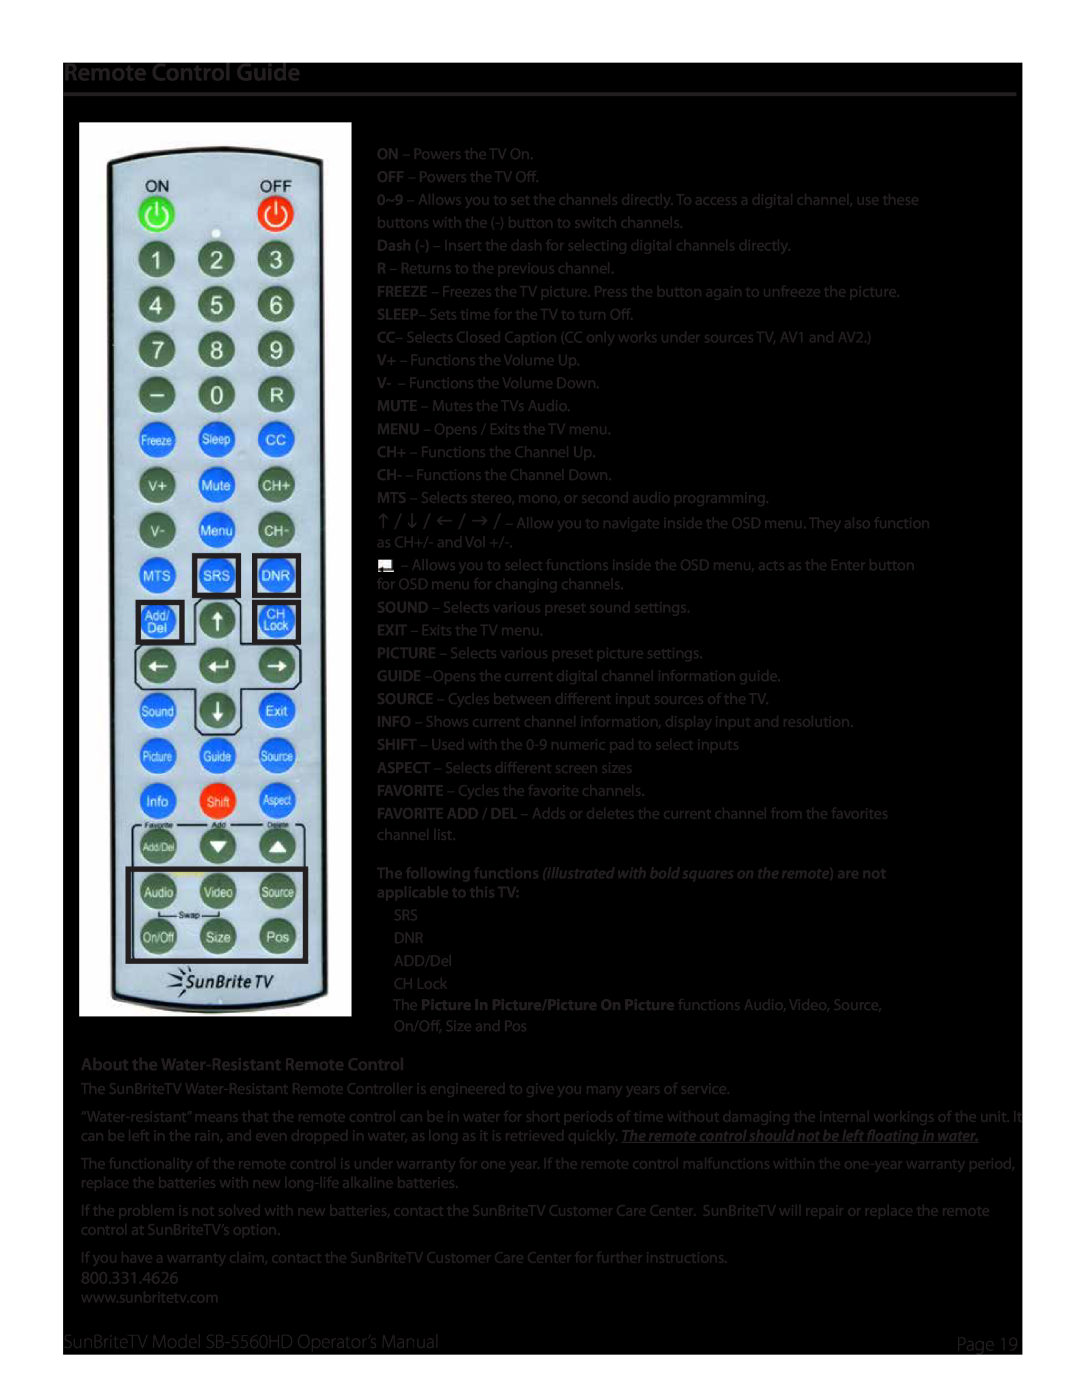 SunBriteTV SB5560HDSL, SB5560HDBL, SB-5560HD-BL manual Remote Control Guide, About the Water-Resistant Remote Control 